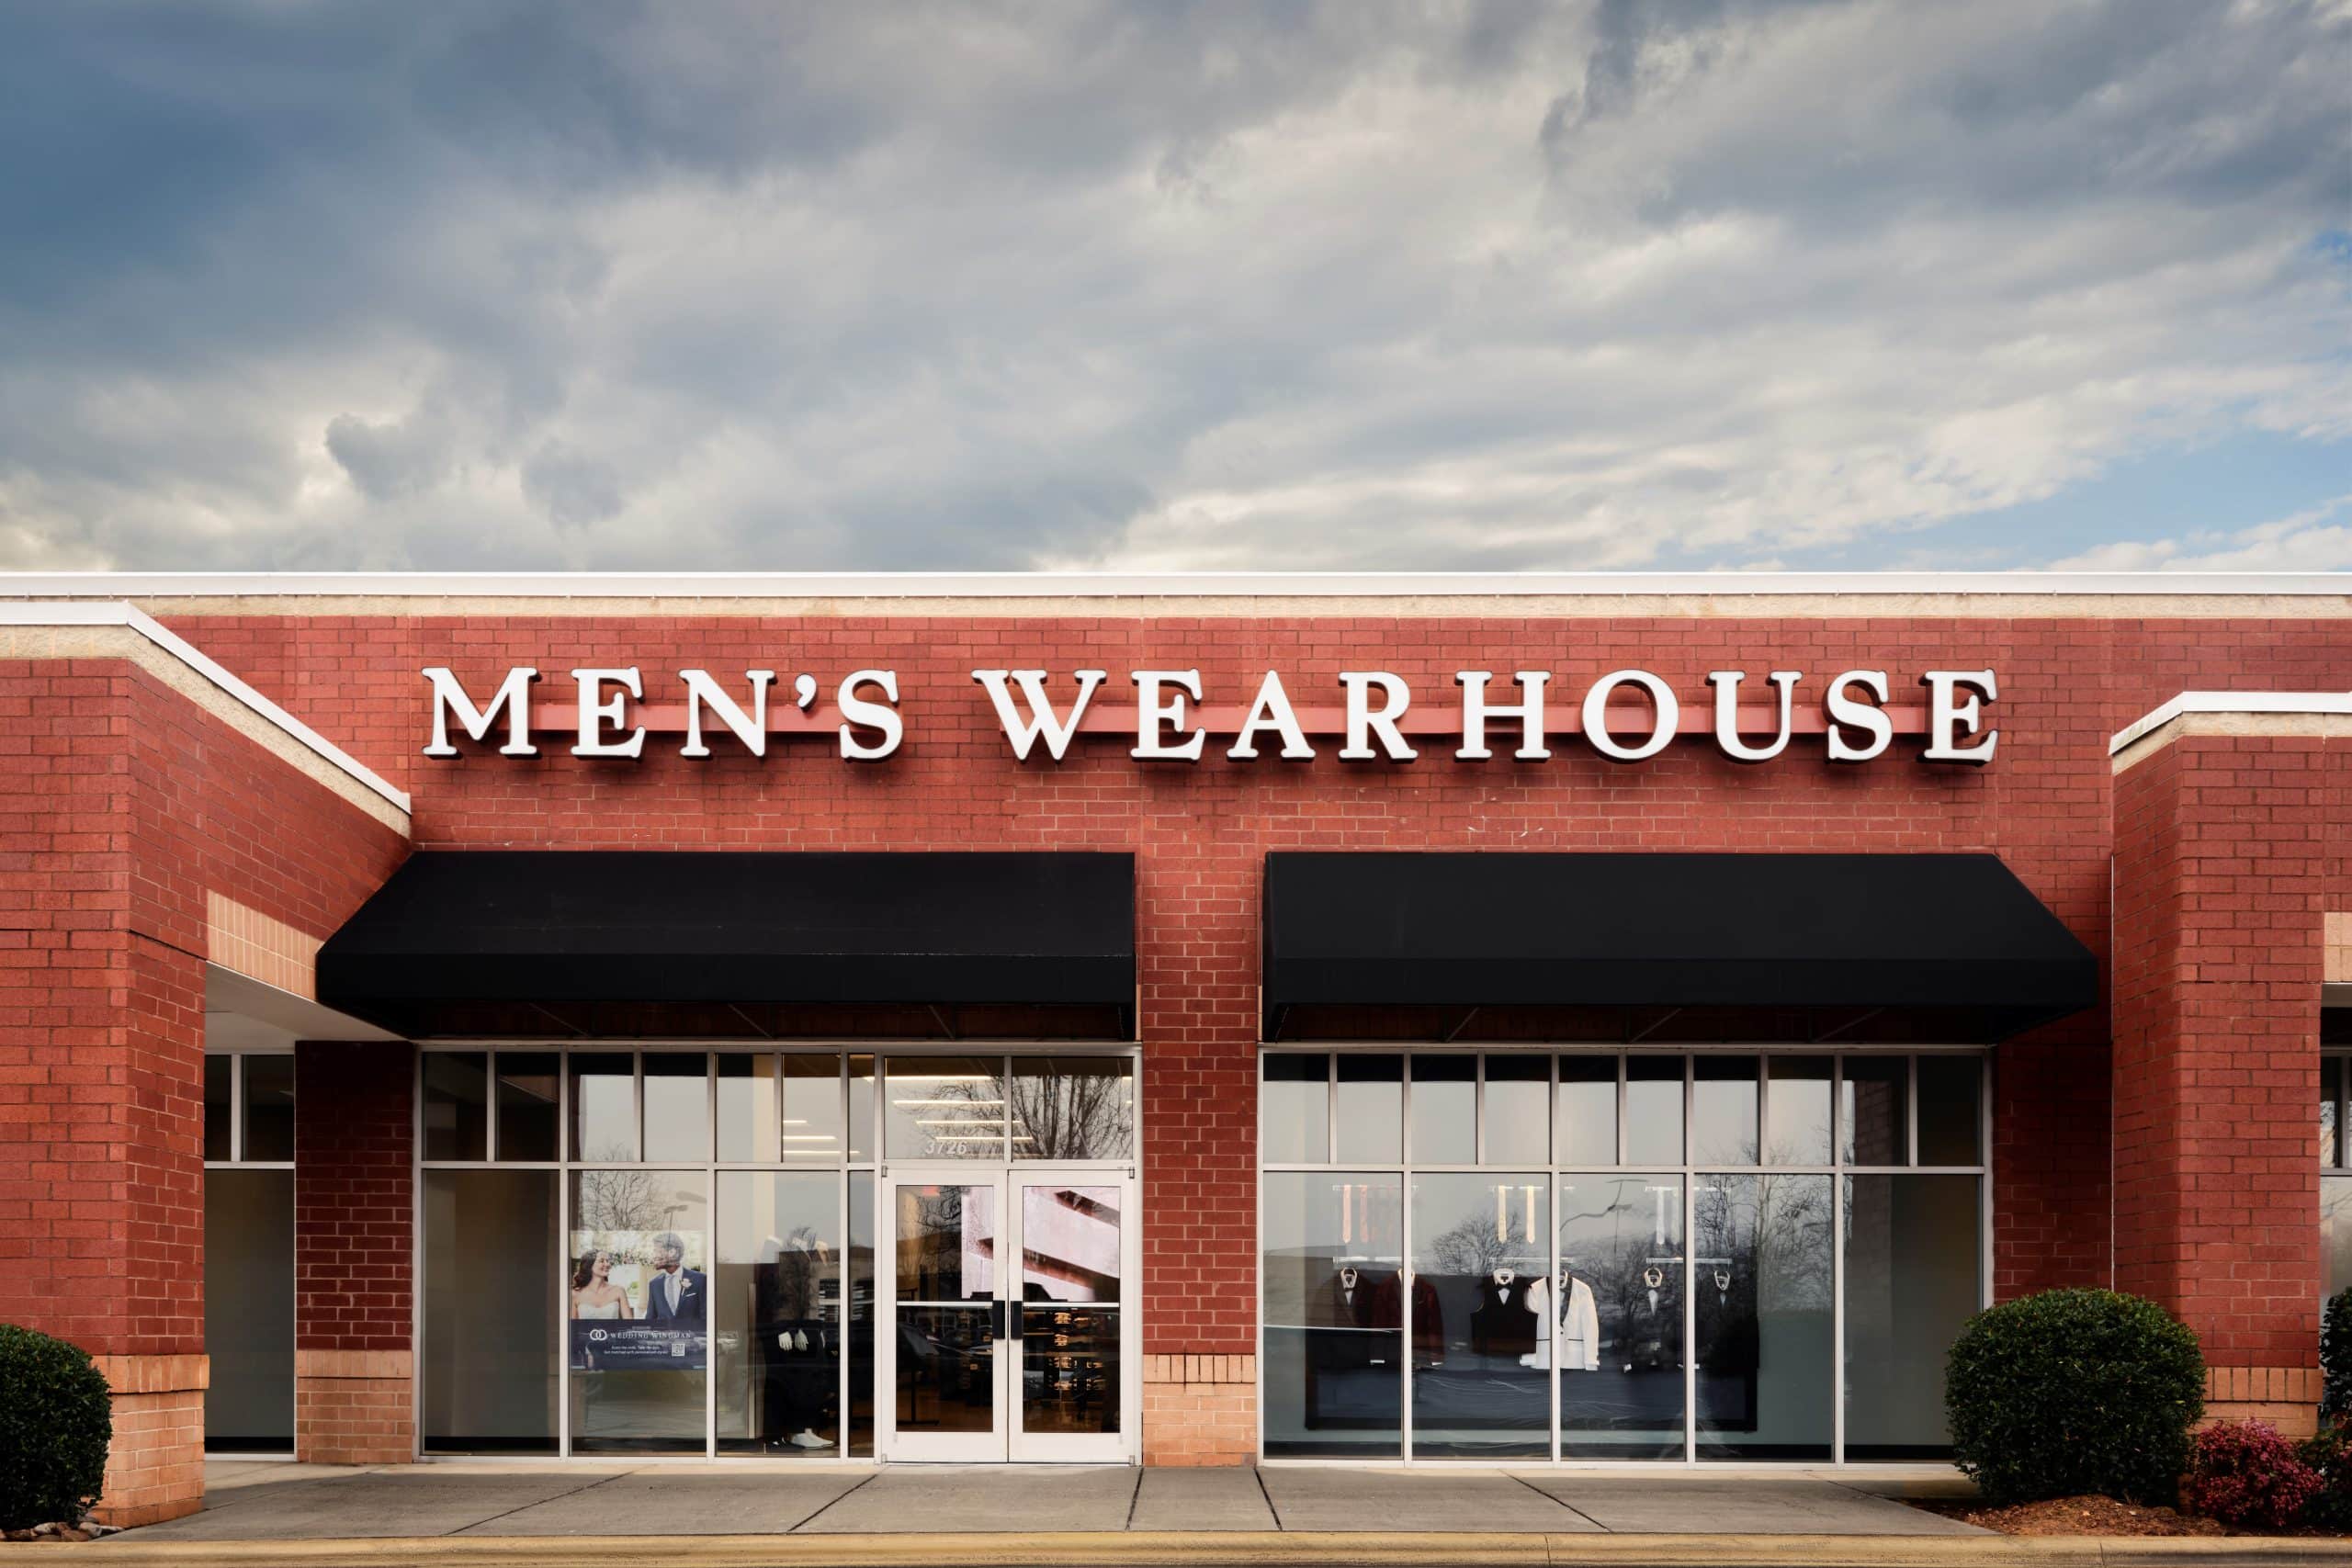 Men's Wearhouse storefront in Gastonia, North Carolina